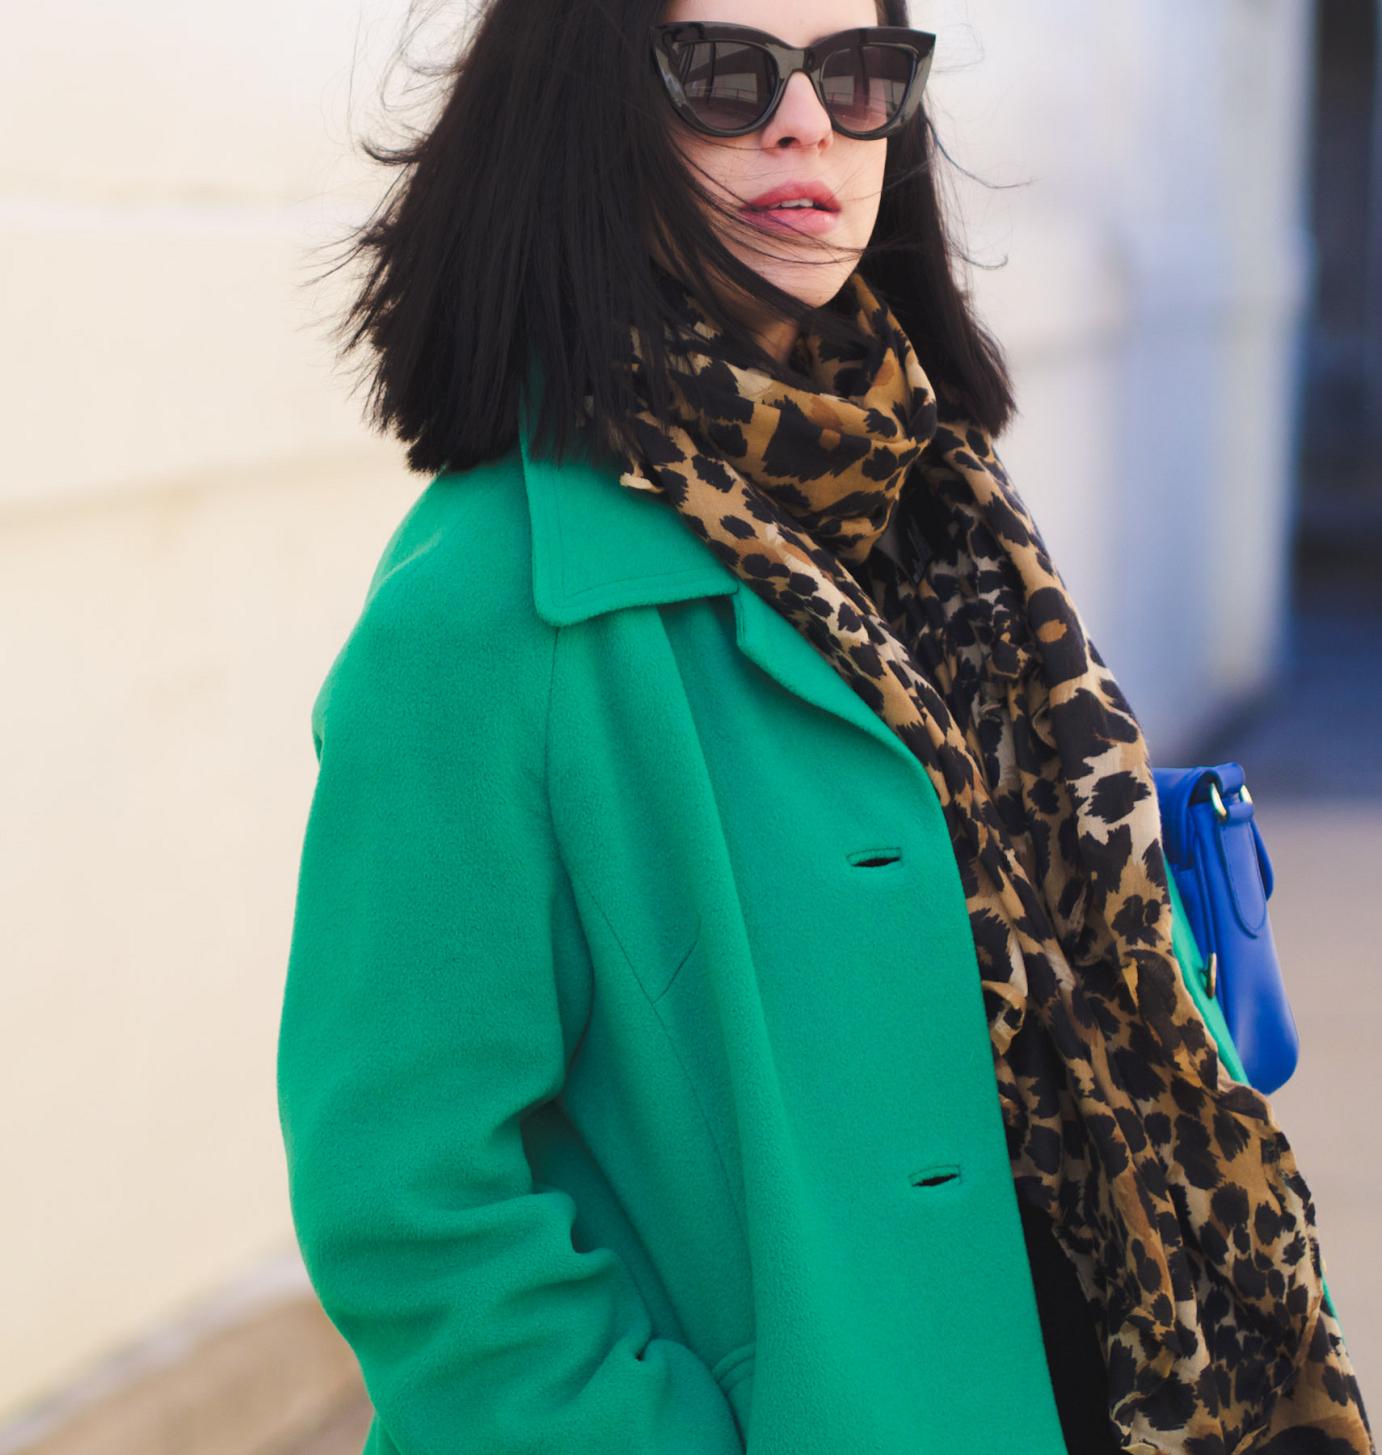 bittersweet colours, street style, leopard print, green coat, vintage, maternity style, 31 weeks,